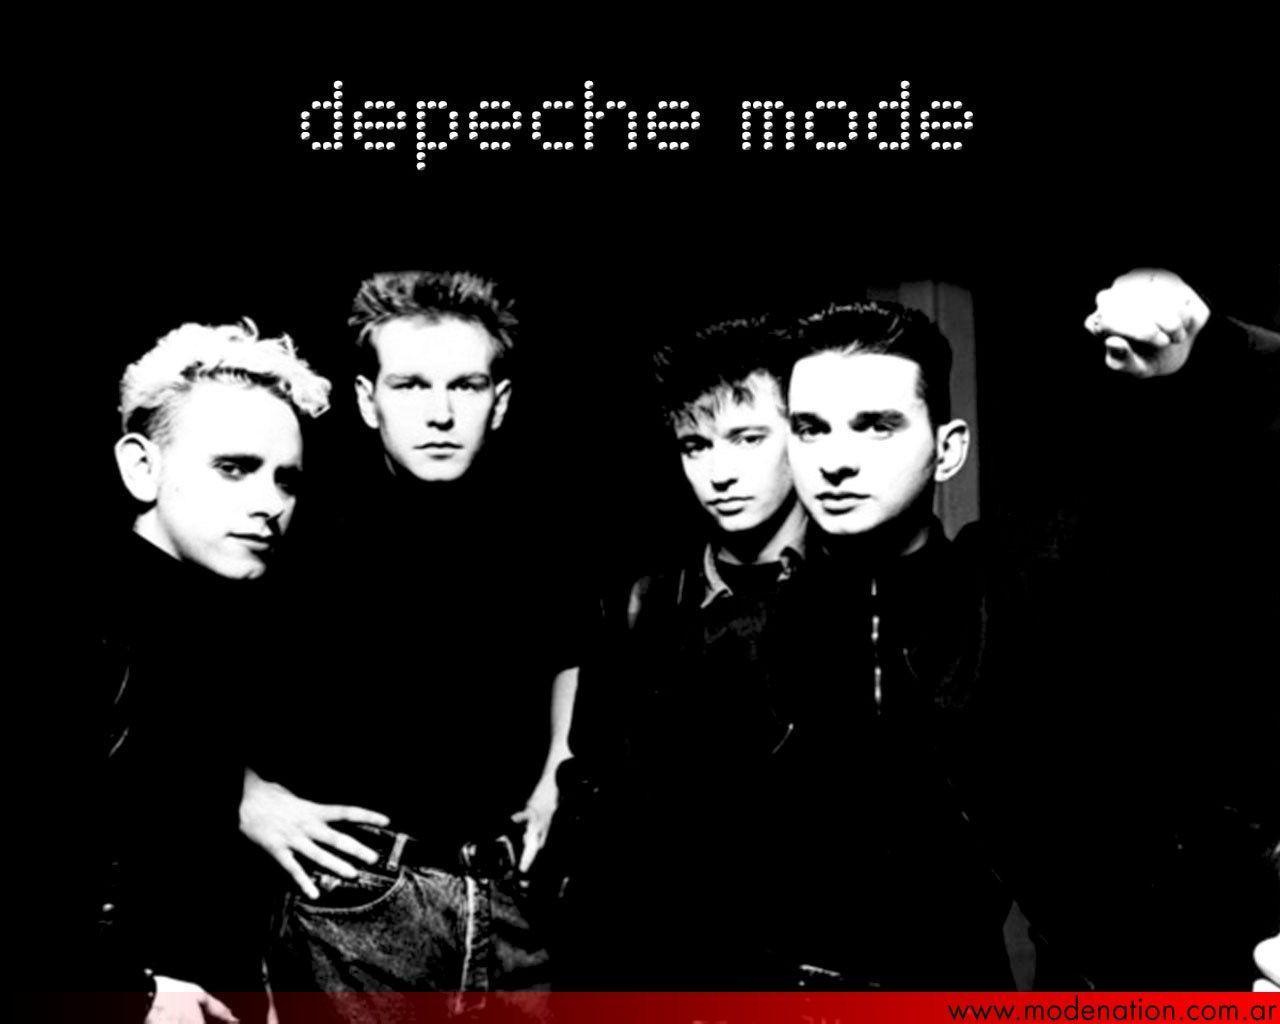 Depeche Mode photo 132 of 328 pics, wallpapers